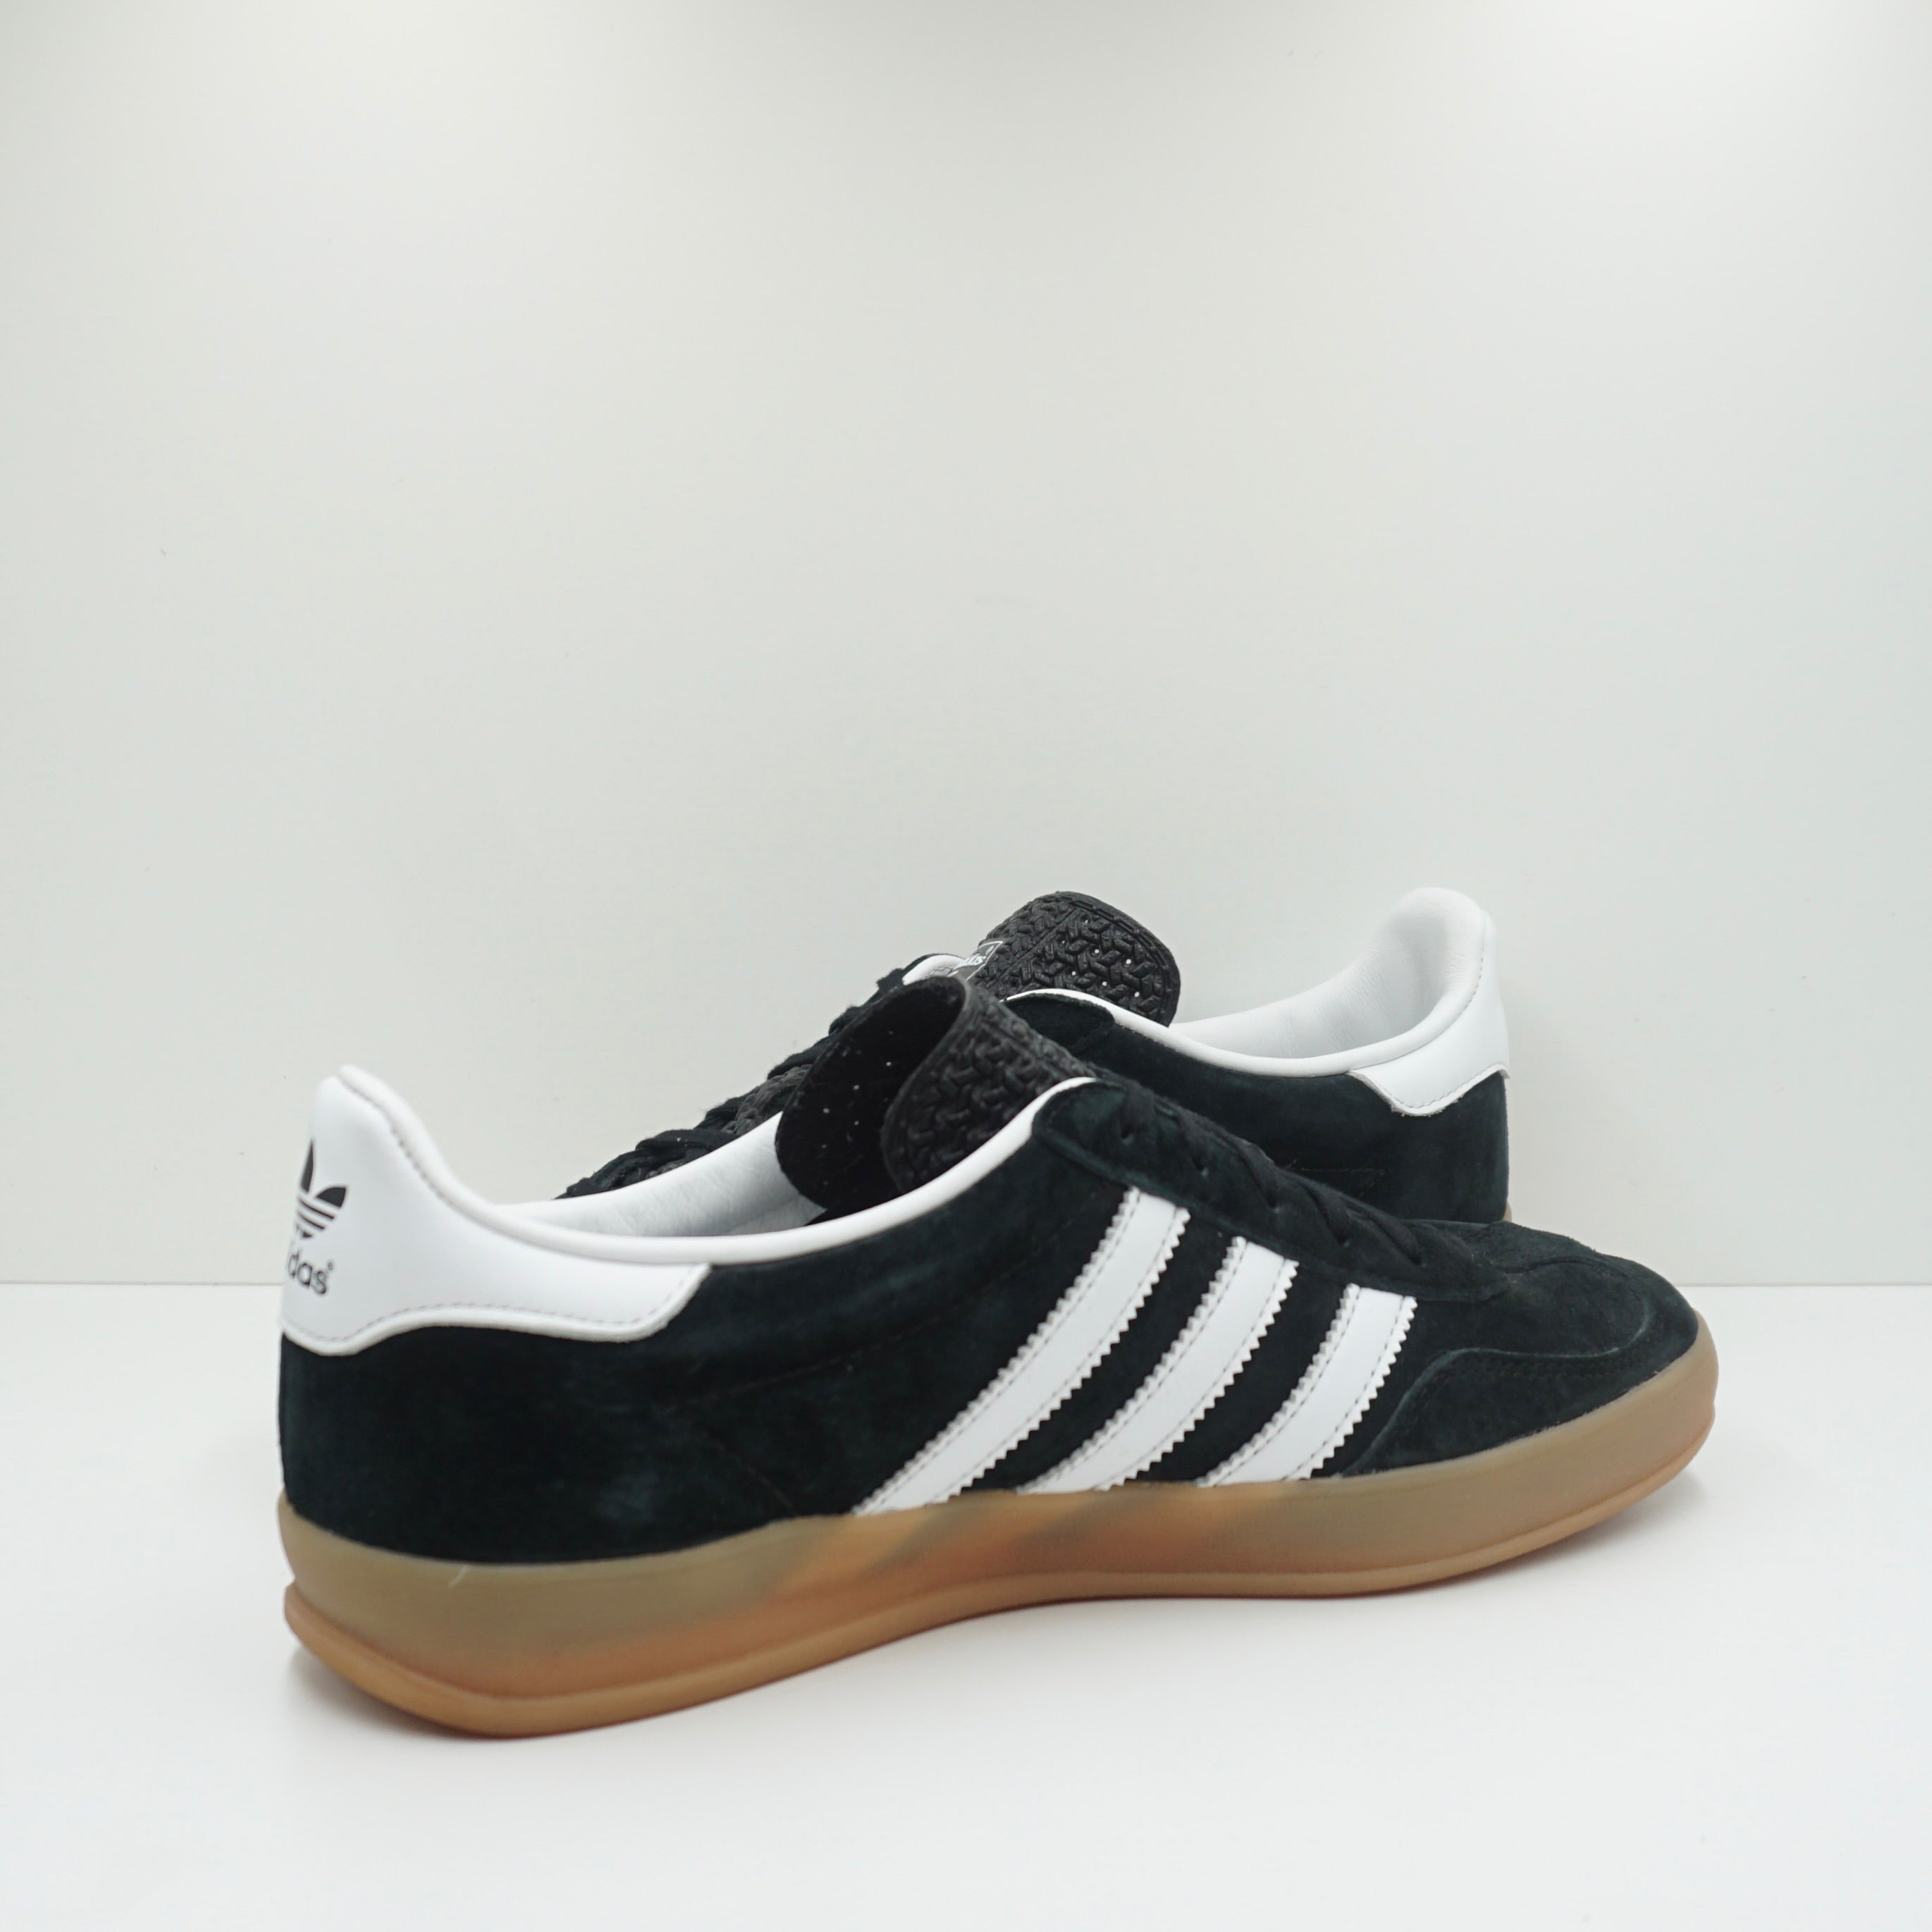 Adidas Gazelle Indoor Black/White